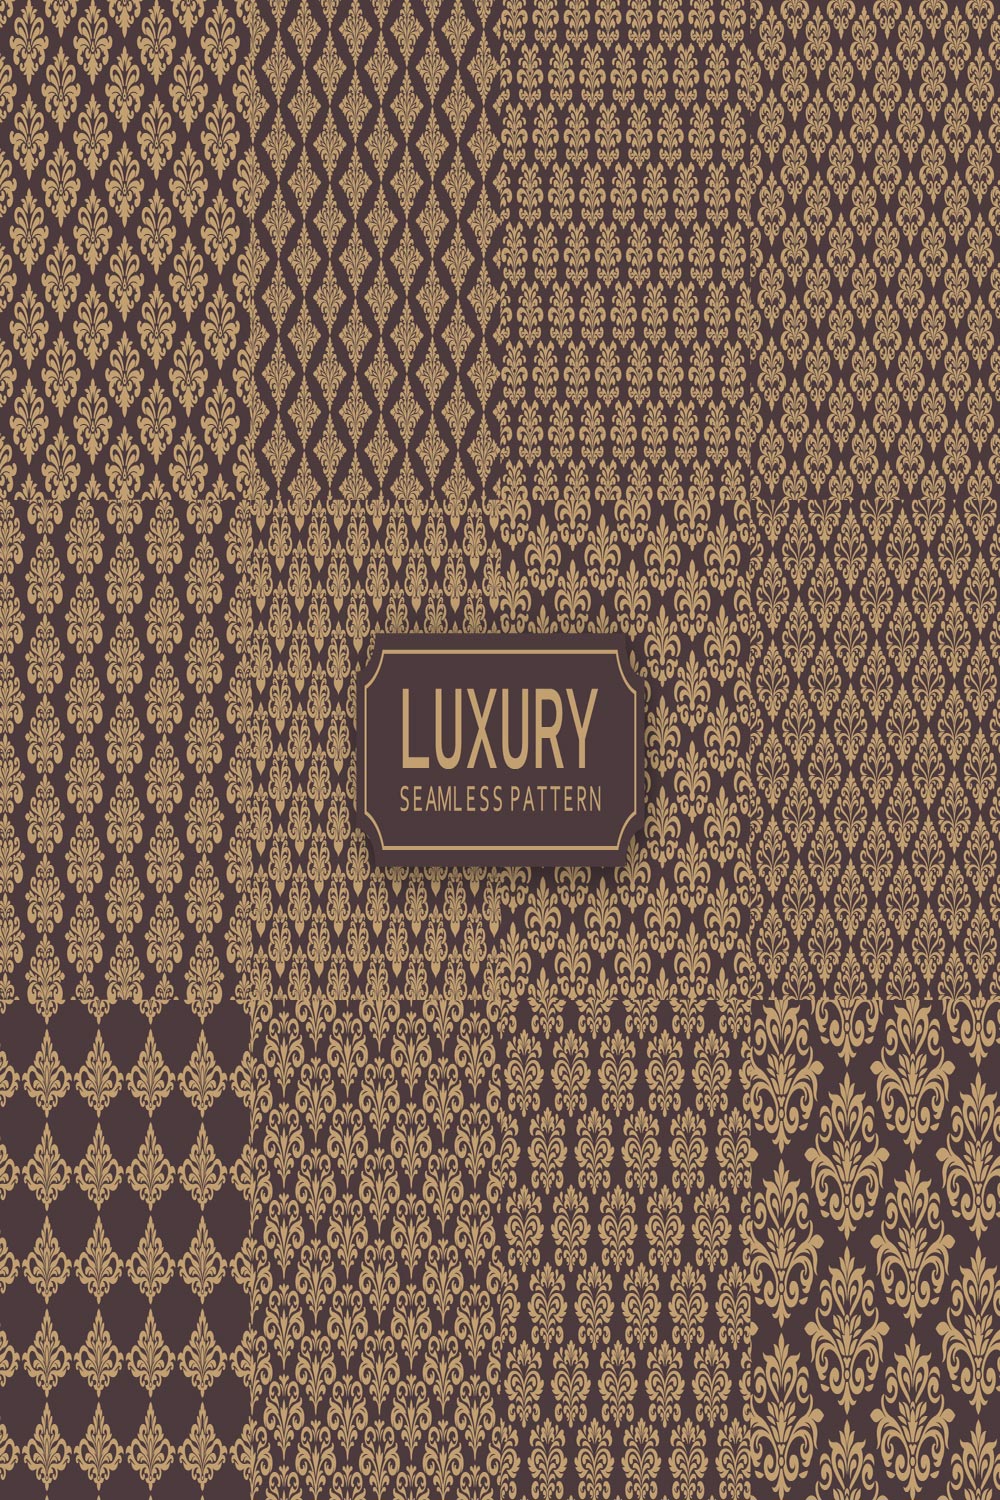 20 geometric seamless luxury pattern pinterest preview image.